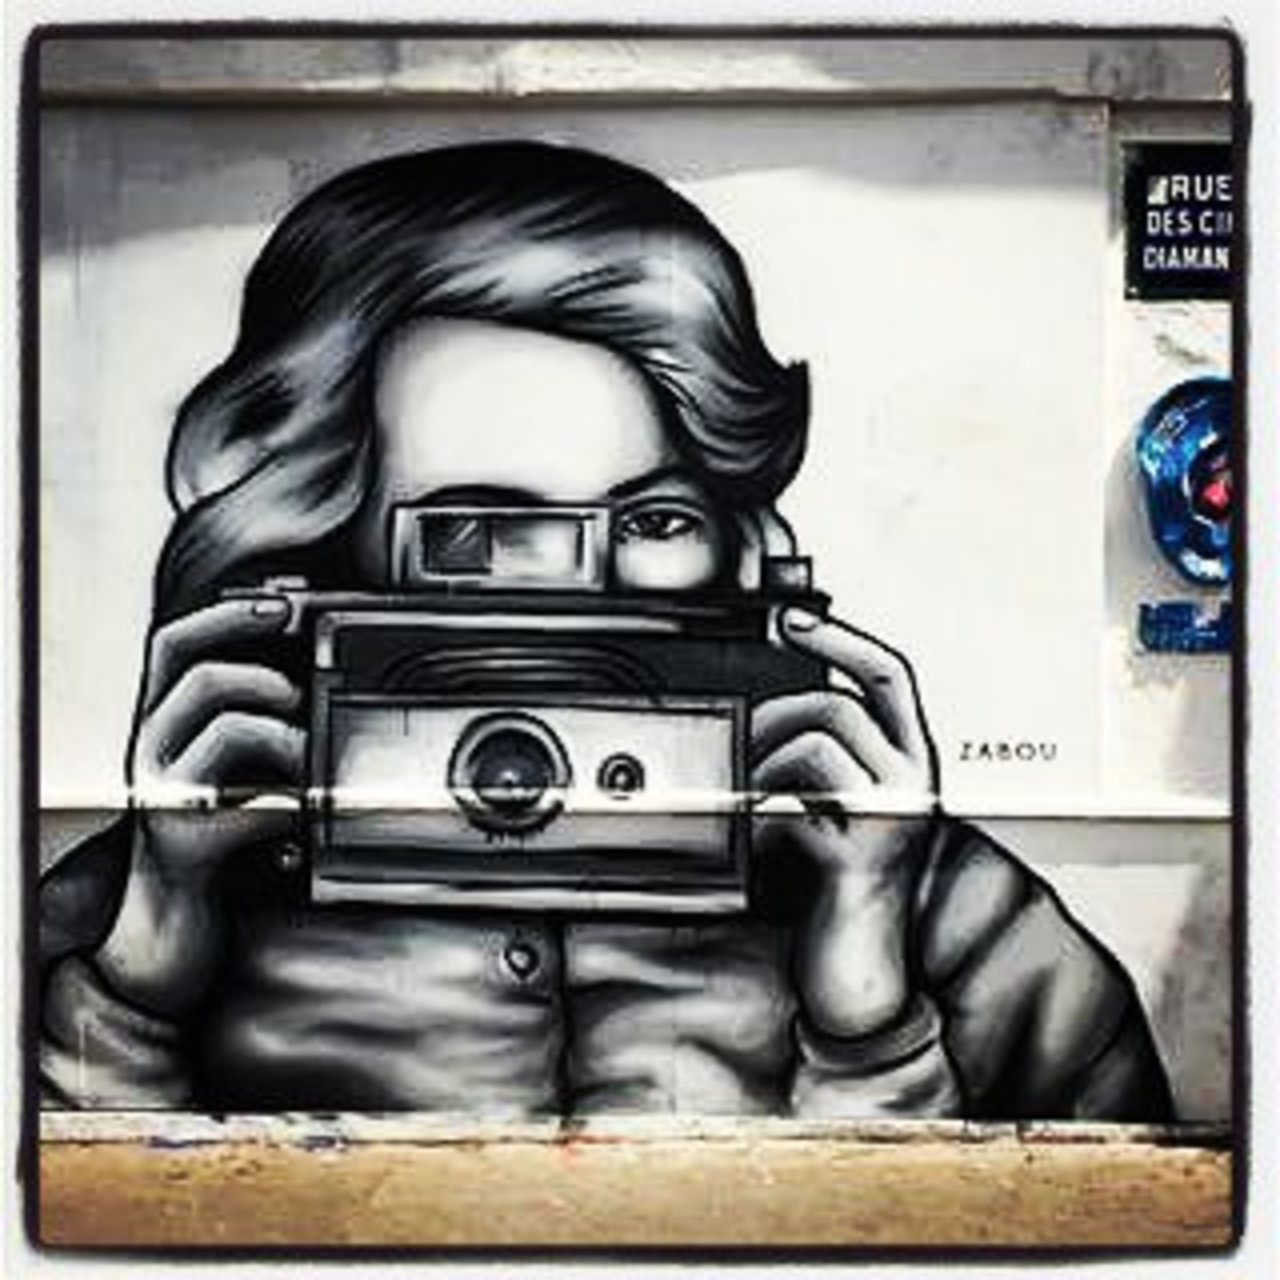 StArtEverywhere: #zabouartist #streetart #art #graffiti #wallart #urbanart #zabou #londonstreetart #paris #streeta… https://t.co/I3uiIRhtxK